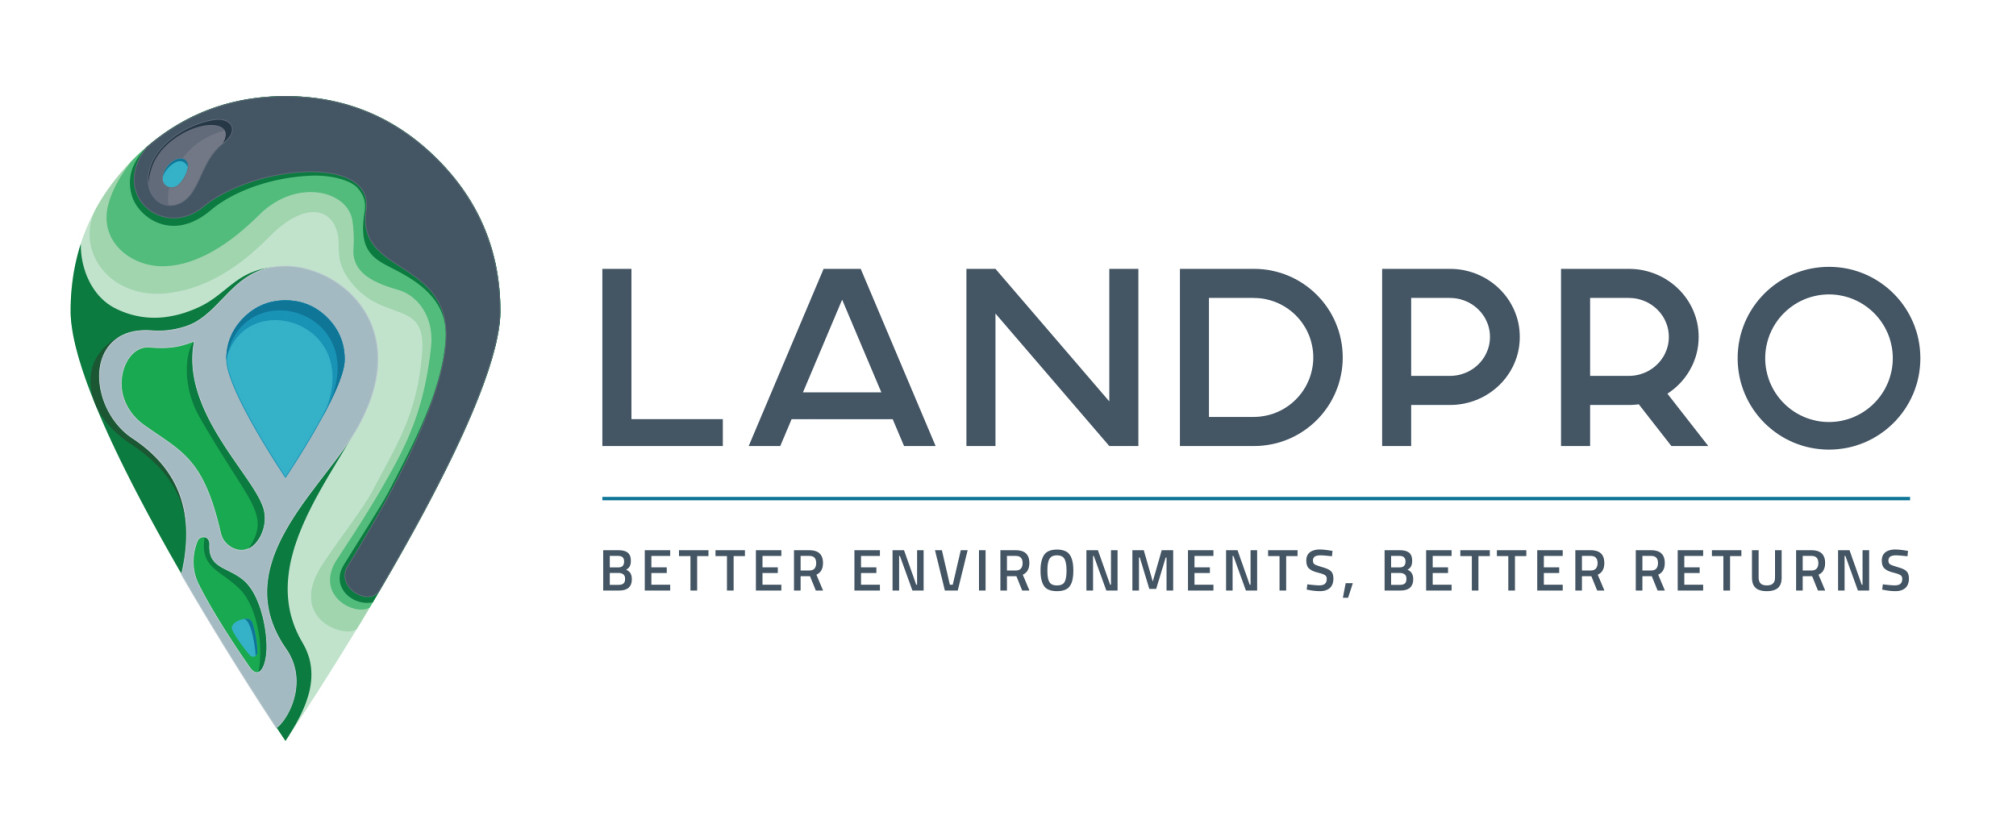 Landpro Ltd